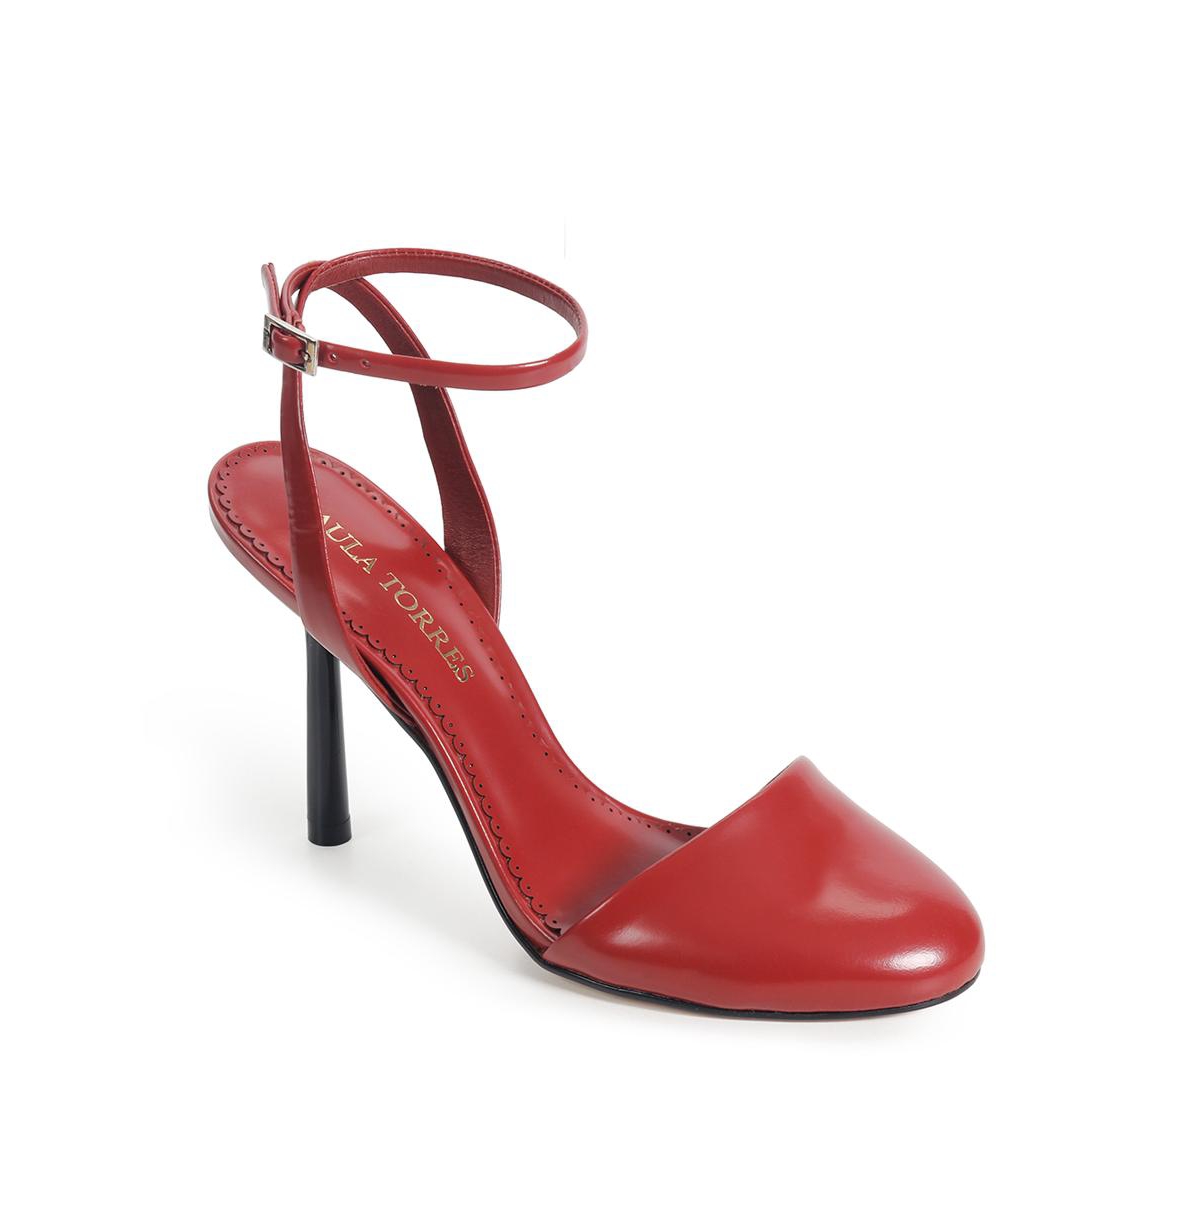 Shoes Women's Baden Ankle-Strap Pumps - Carmim red